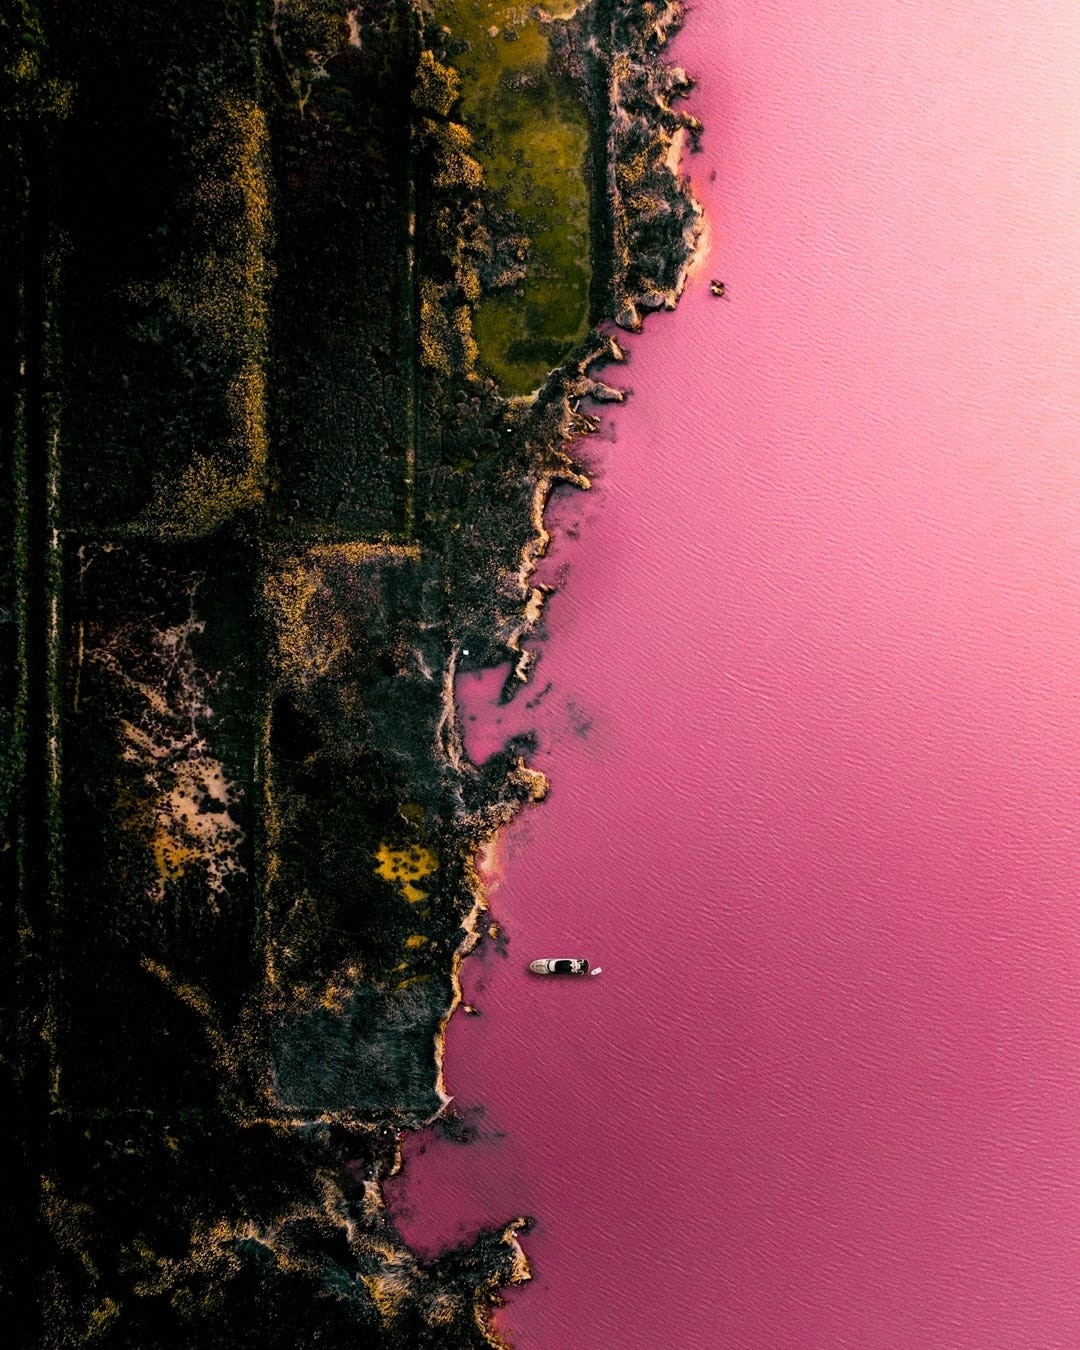 Розовое озеро в Мерсии, Испания. Фотограф Генри До